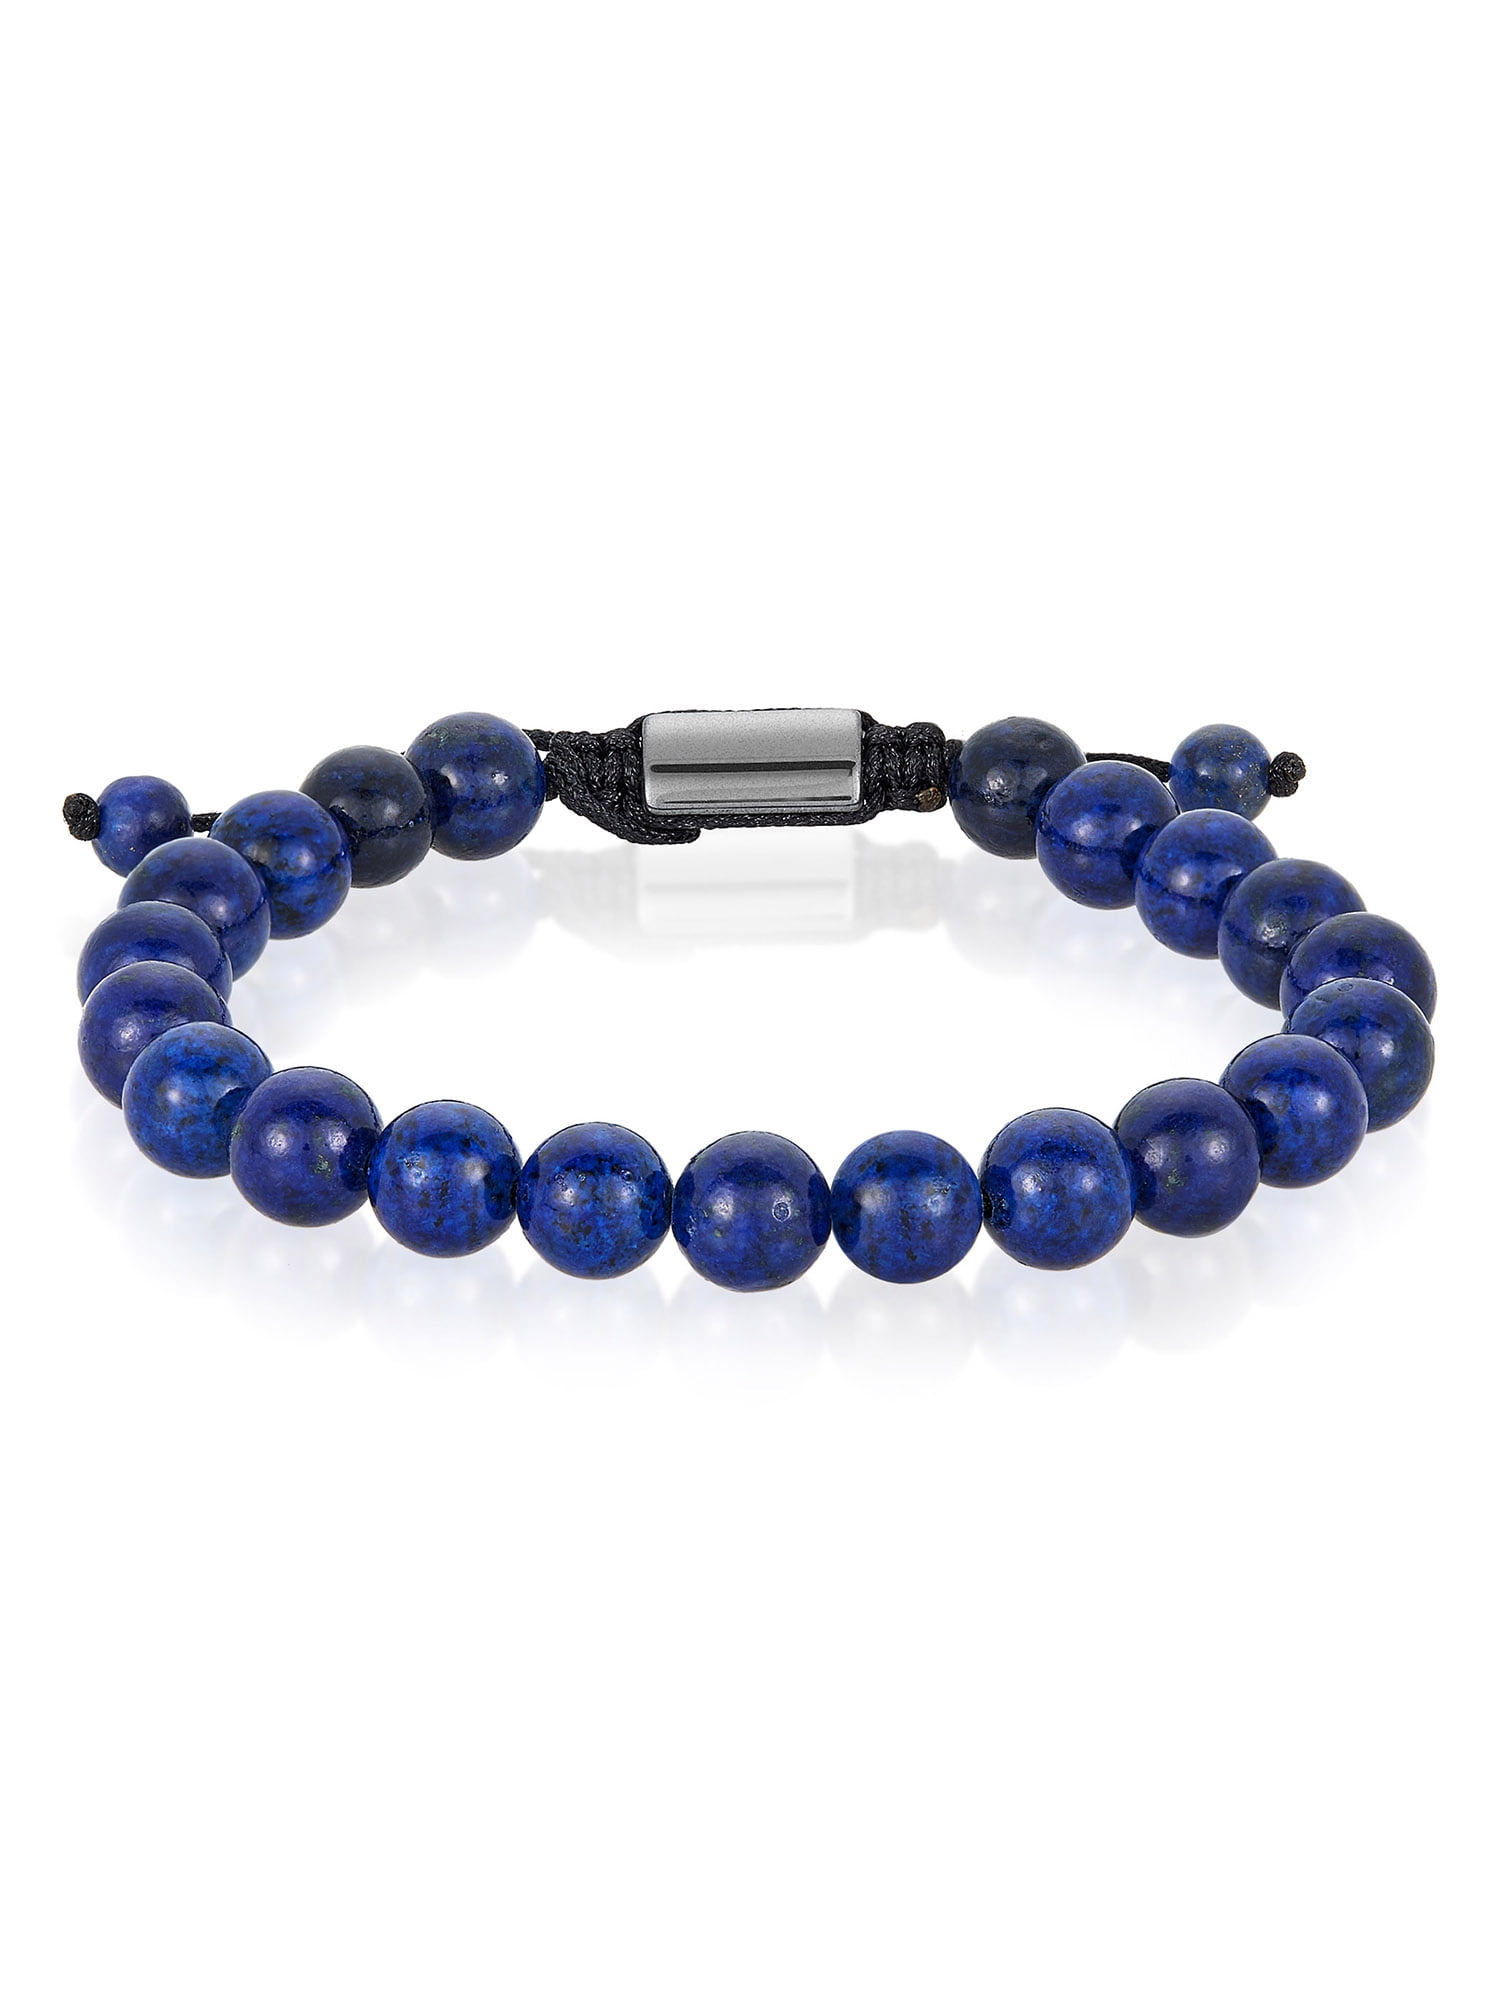 Lapis Lazuli Gemstone Motivational Bracelet for Men and Women – The Hustle  Prevails